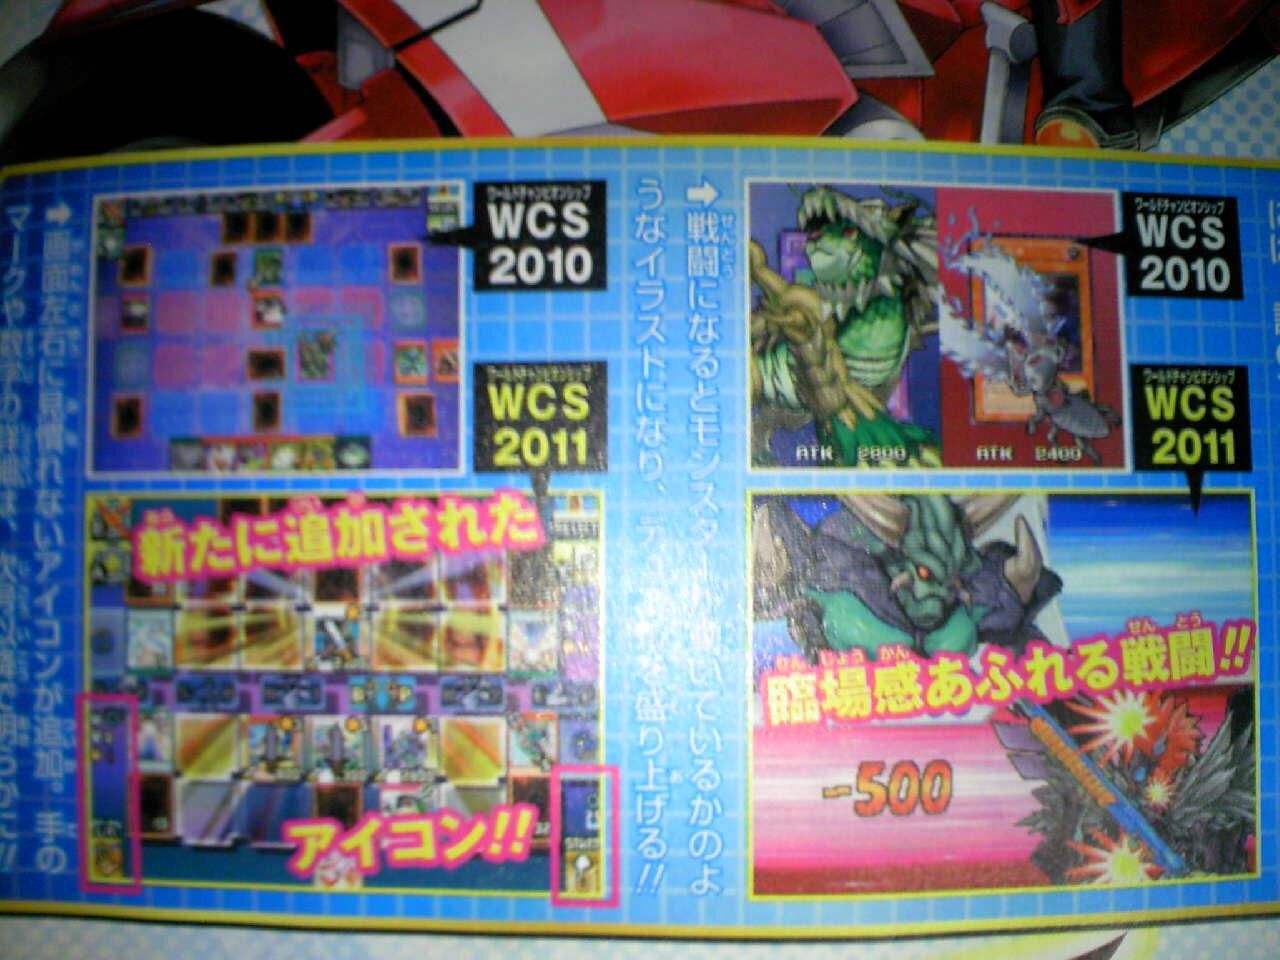 Yu-Gi-Oh! World Championship 2011: Over the Nexus 